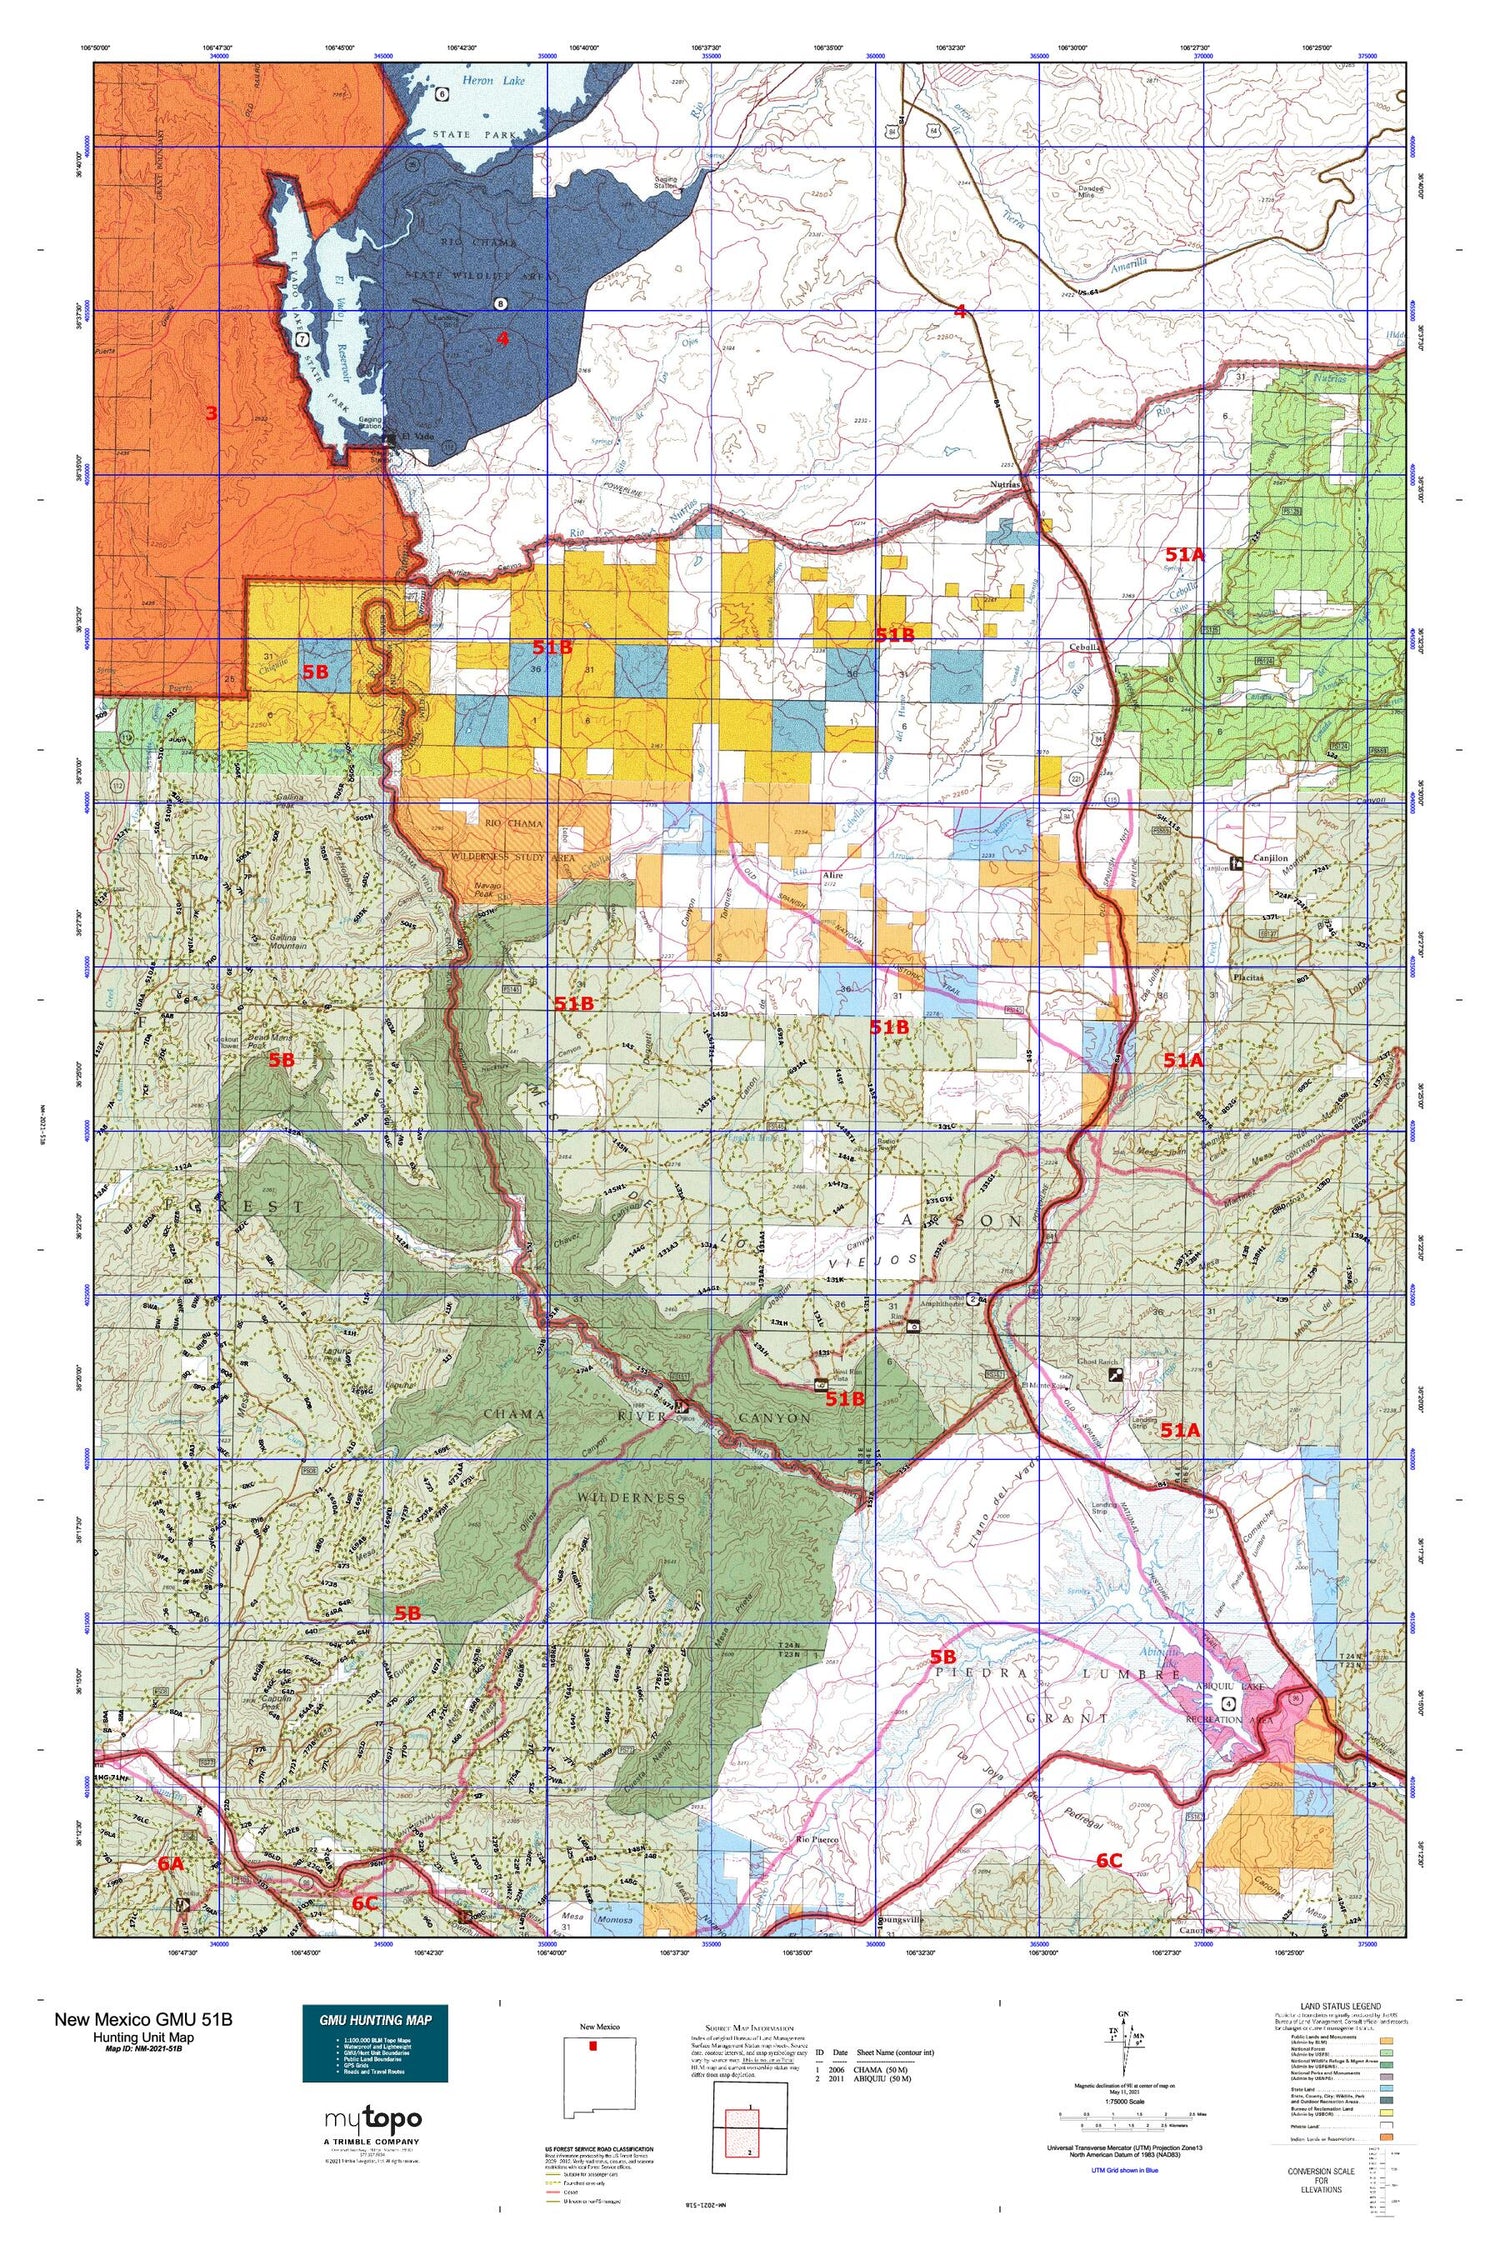 New Mexico GMU 51B Map Image